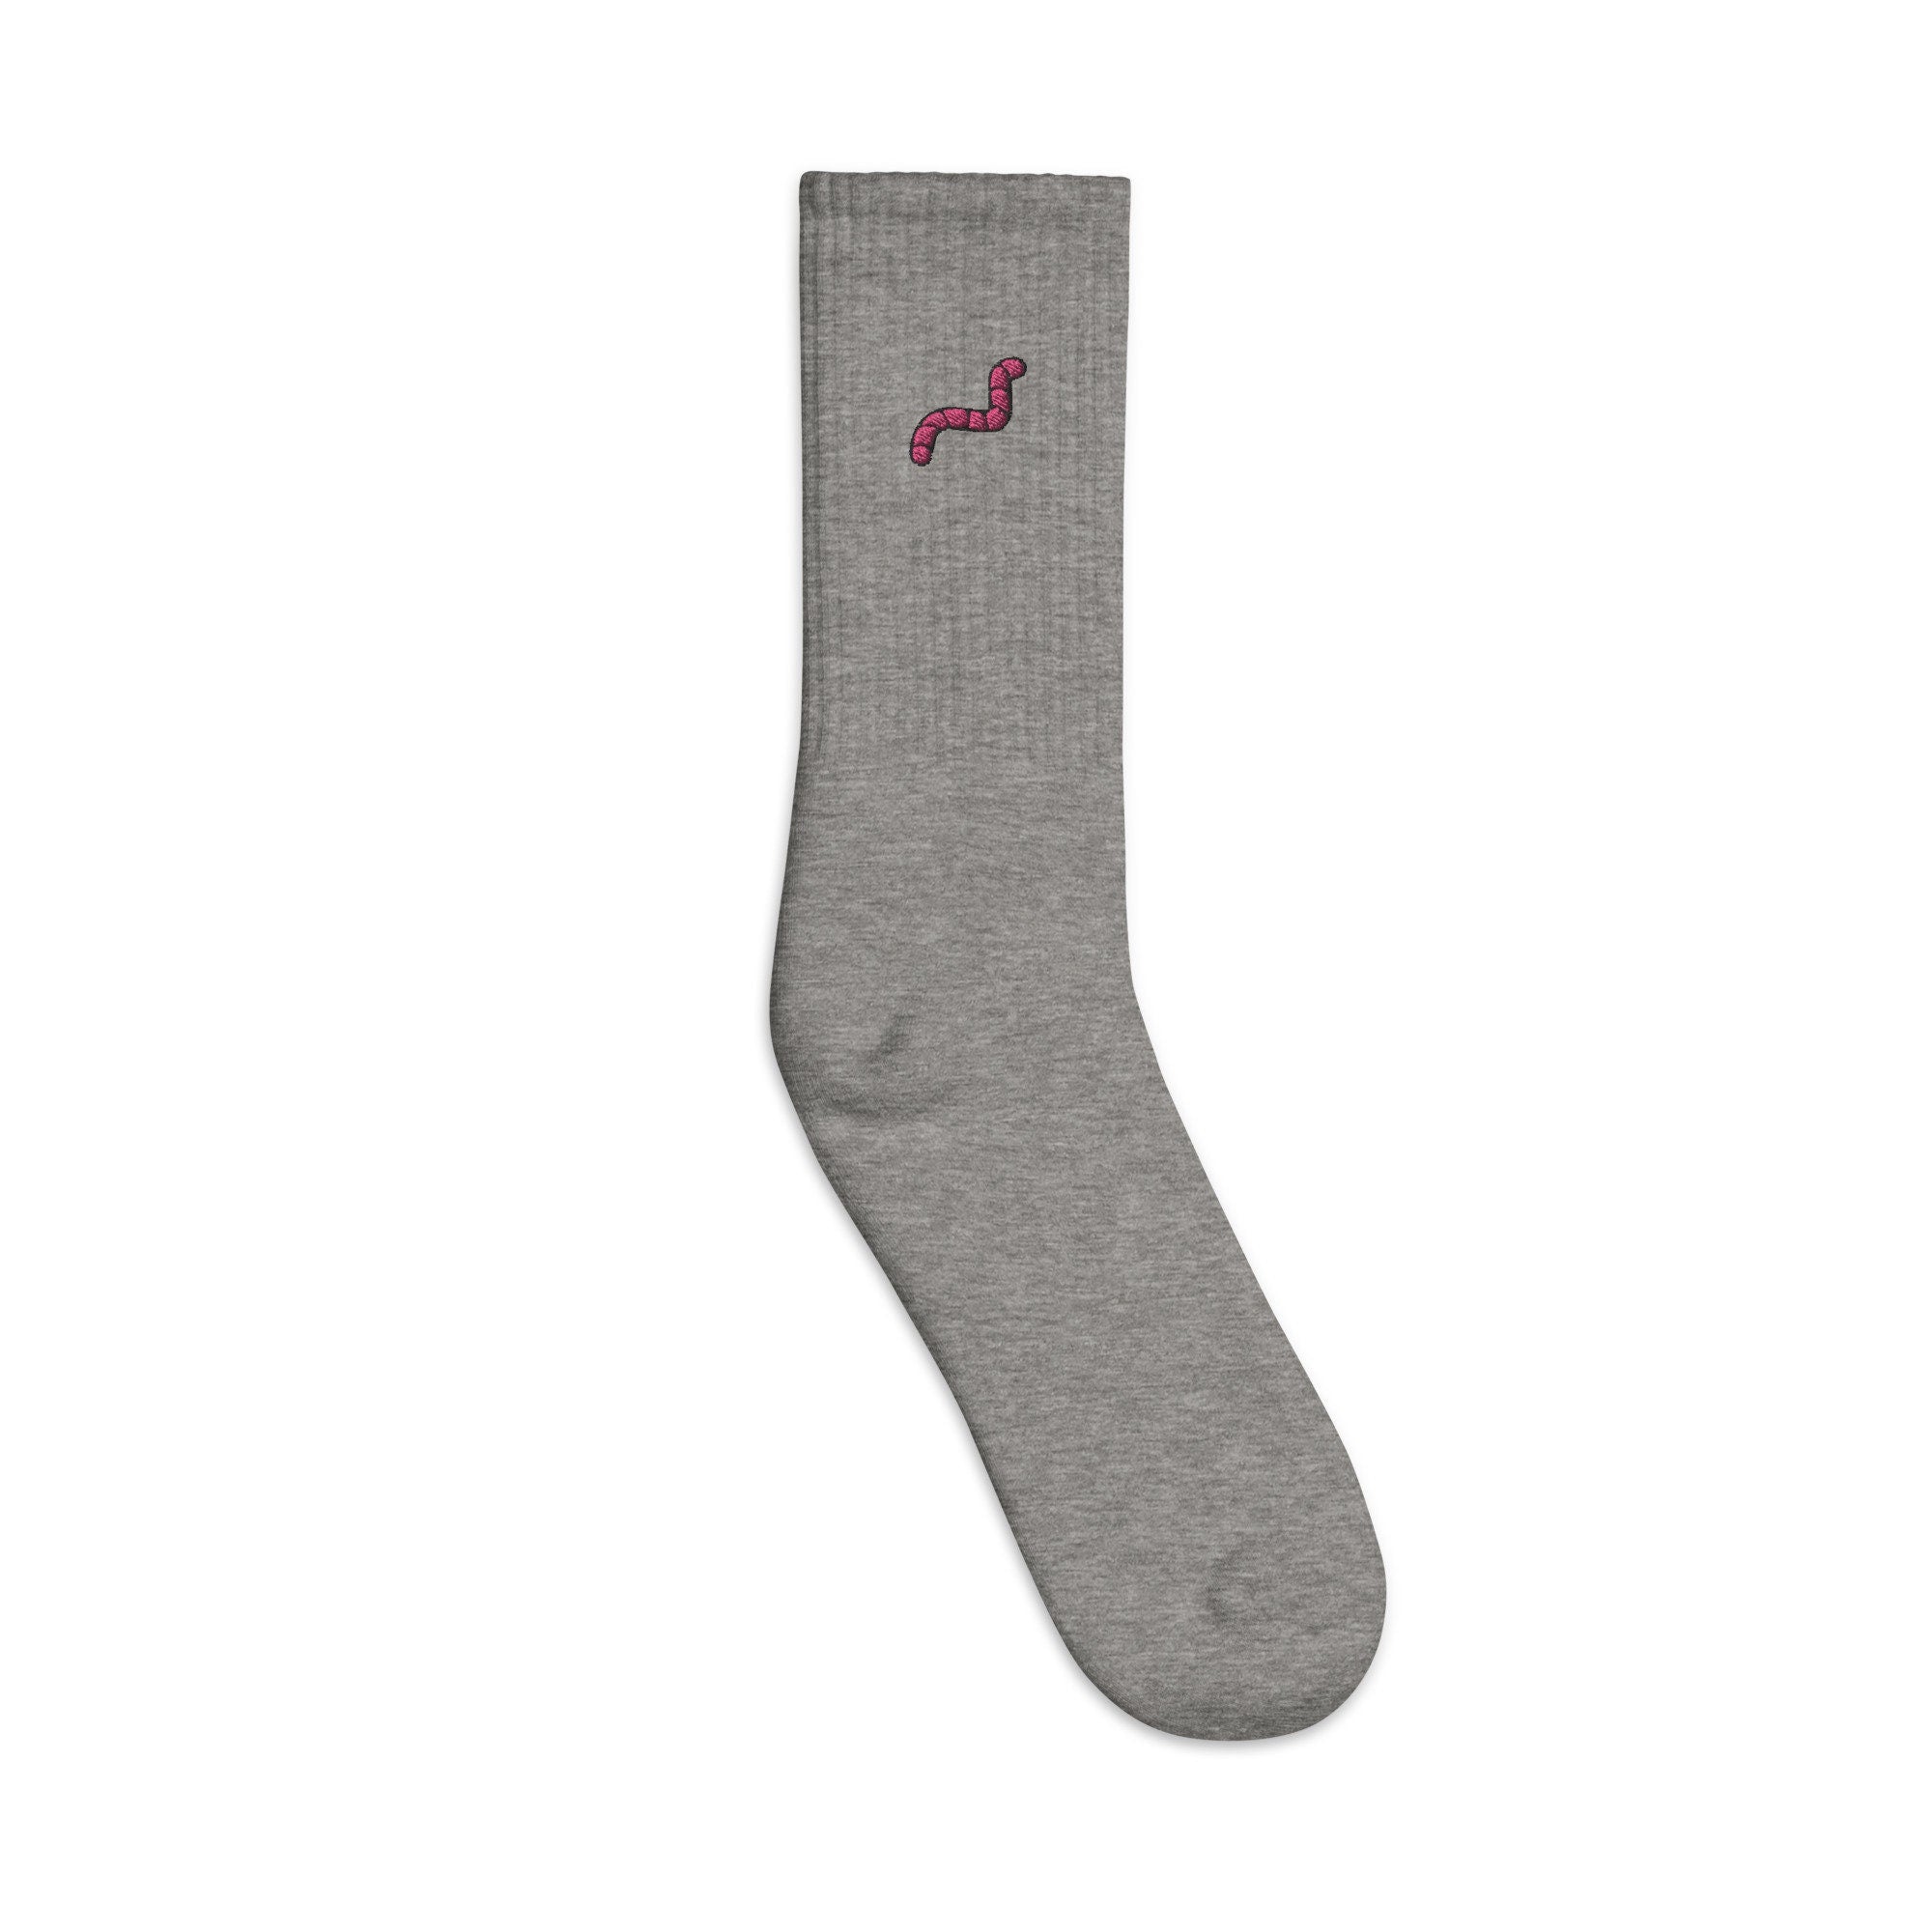 Worm Embroidered Socks, Premium Embroidered Socks, Long Socks Gift - Multiple Colors